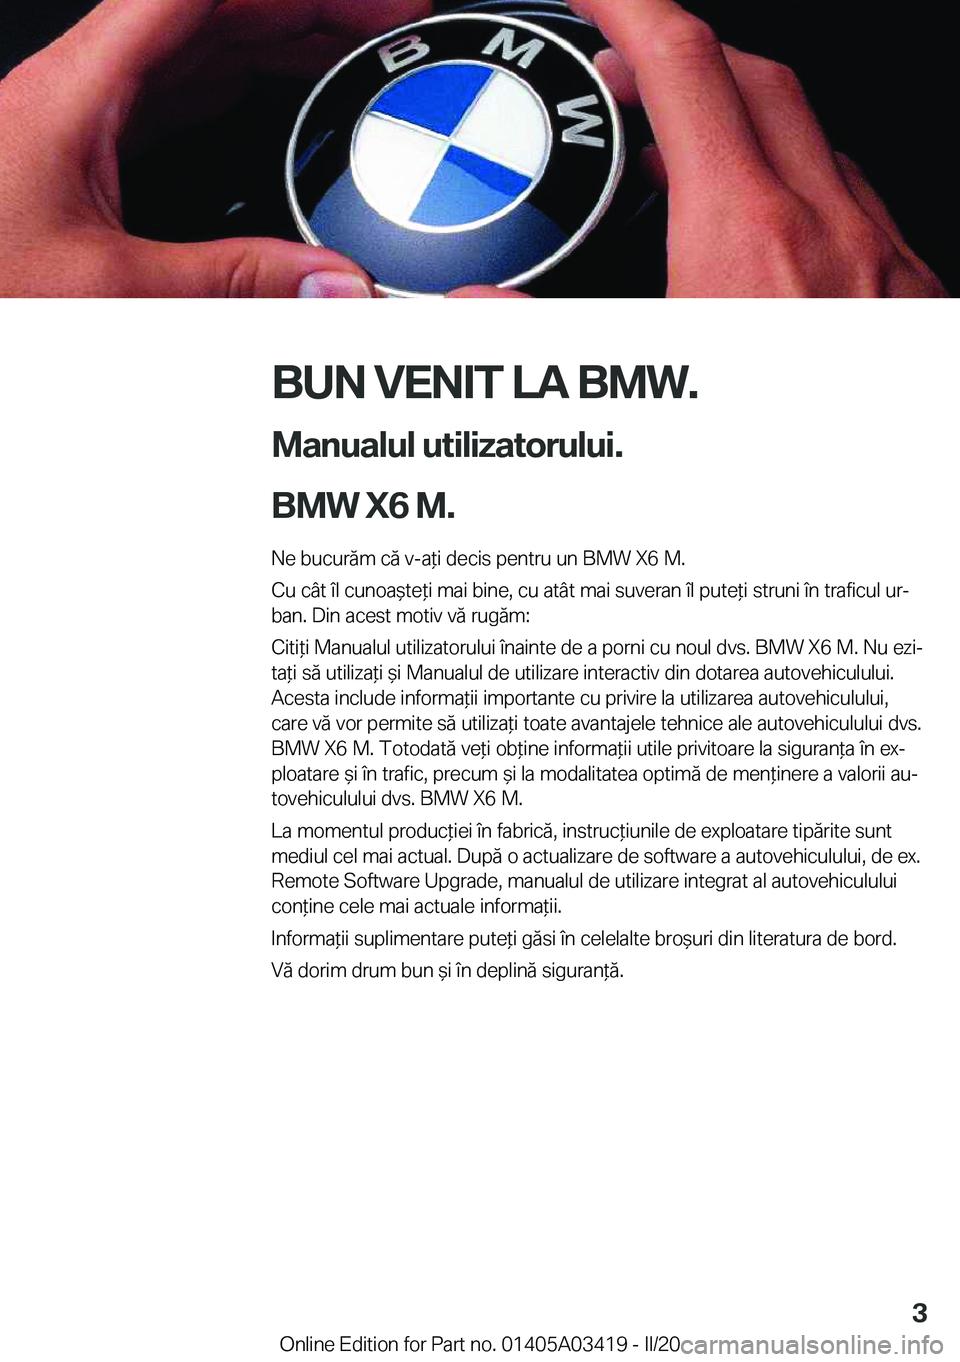 BMW X6 M 2020  Ghiduri De Utilizare (in Romanian) �B�U�N��V�E�N�I�T��L�A��B�M�W�.�M�a�n�u�a�l�u�l��u�t�i�l�i�z�a�t�o�r�u�l�u�i�.
�B�M�W��X�6��M�. �N�e��b�u�c�u�r�ă�m��c�ă��v�-�a*�i��d�e�c�i�s��p�e�n�t�r�u��u�n��B�M�W��X�6��M�.
�C�u�